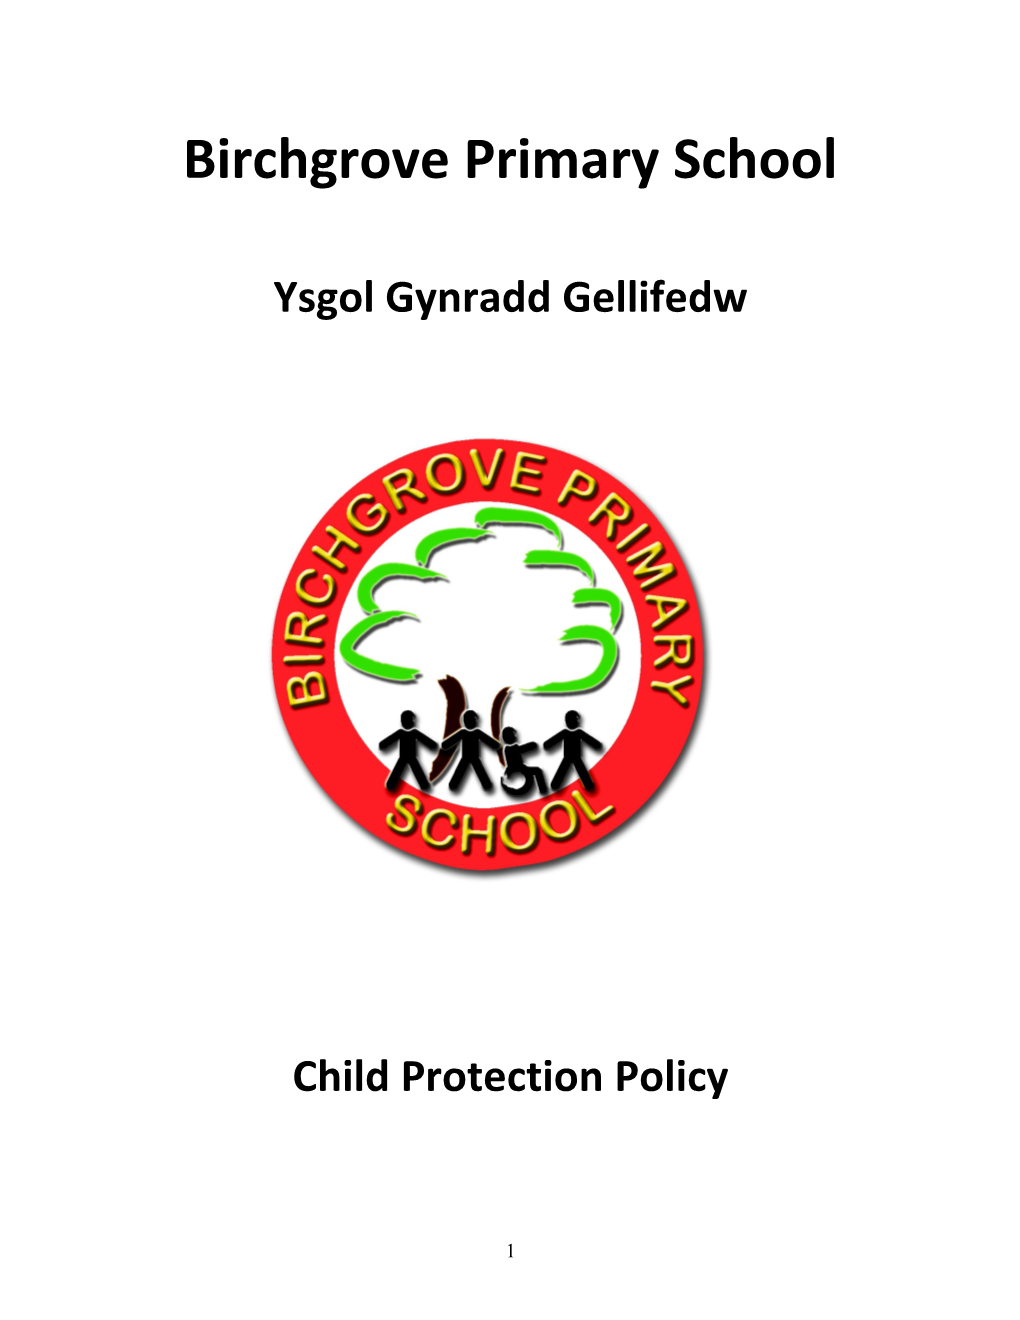 Birchgrove Primary School Child Protection Policy